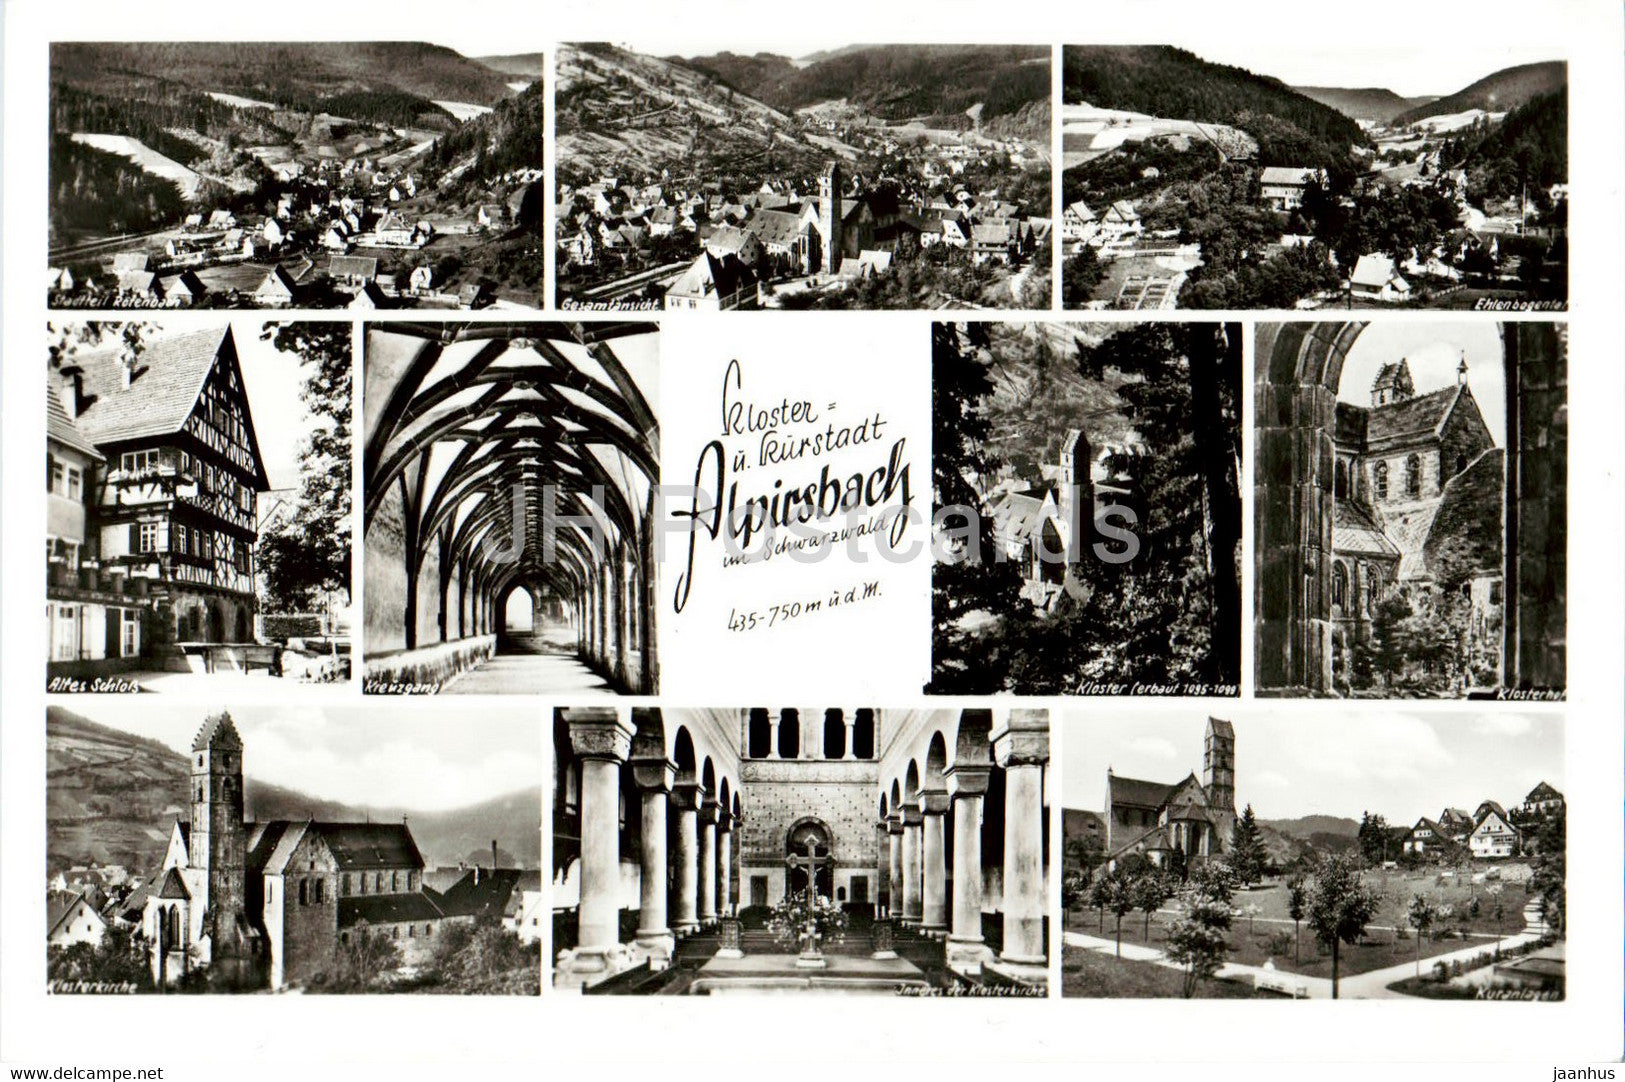 Kloster u Kurstadt Alpirsbach im Schwarzwald - old postcard - Germany - unused - JH Postcards